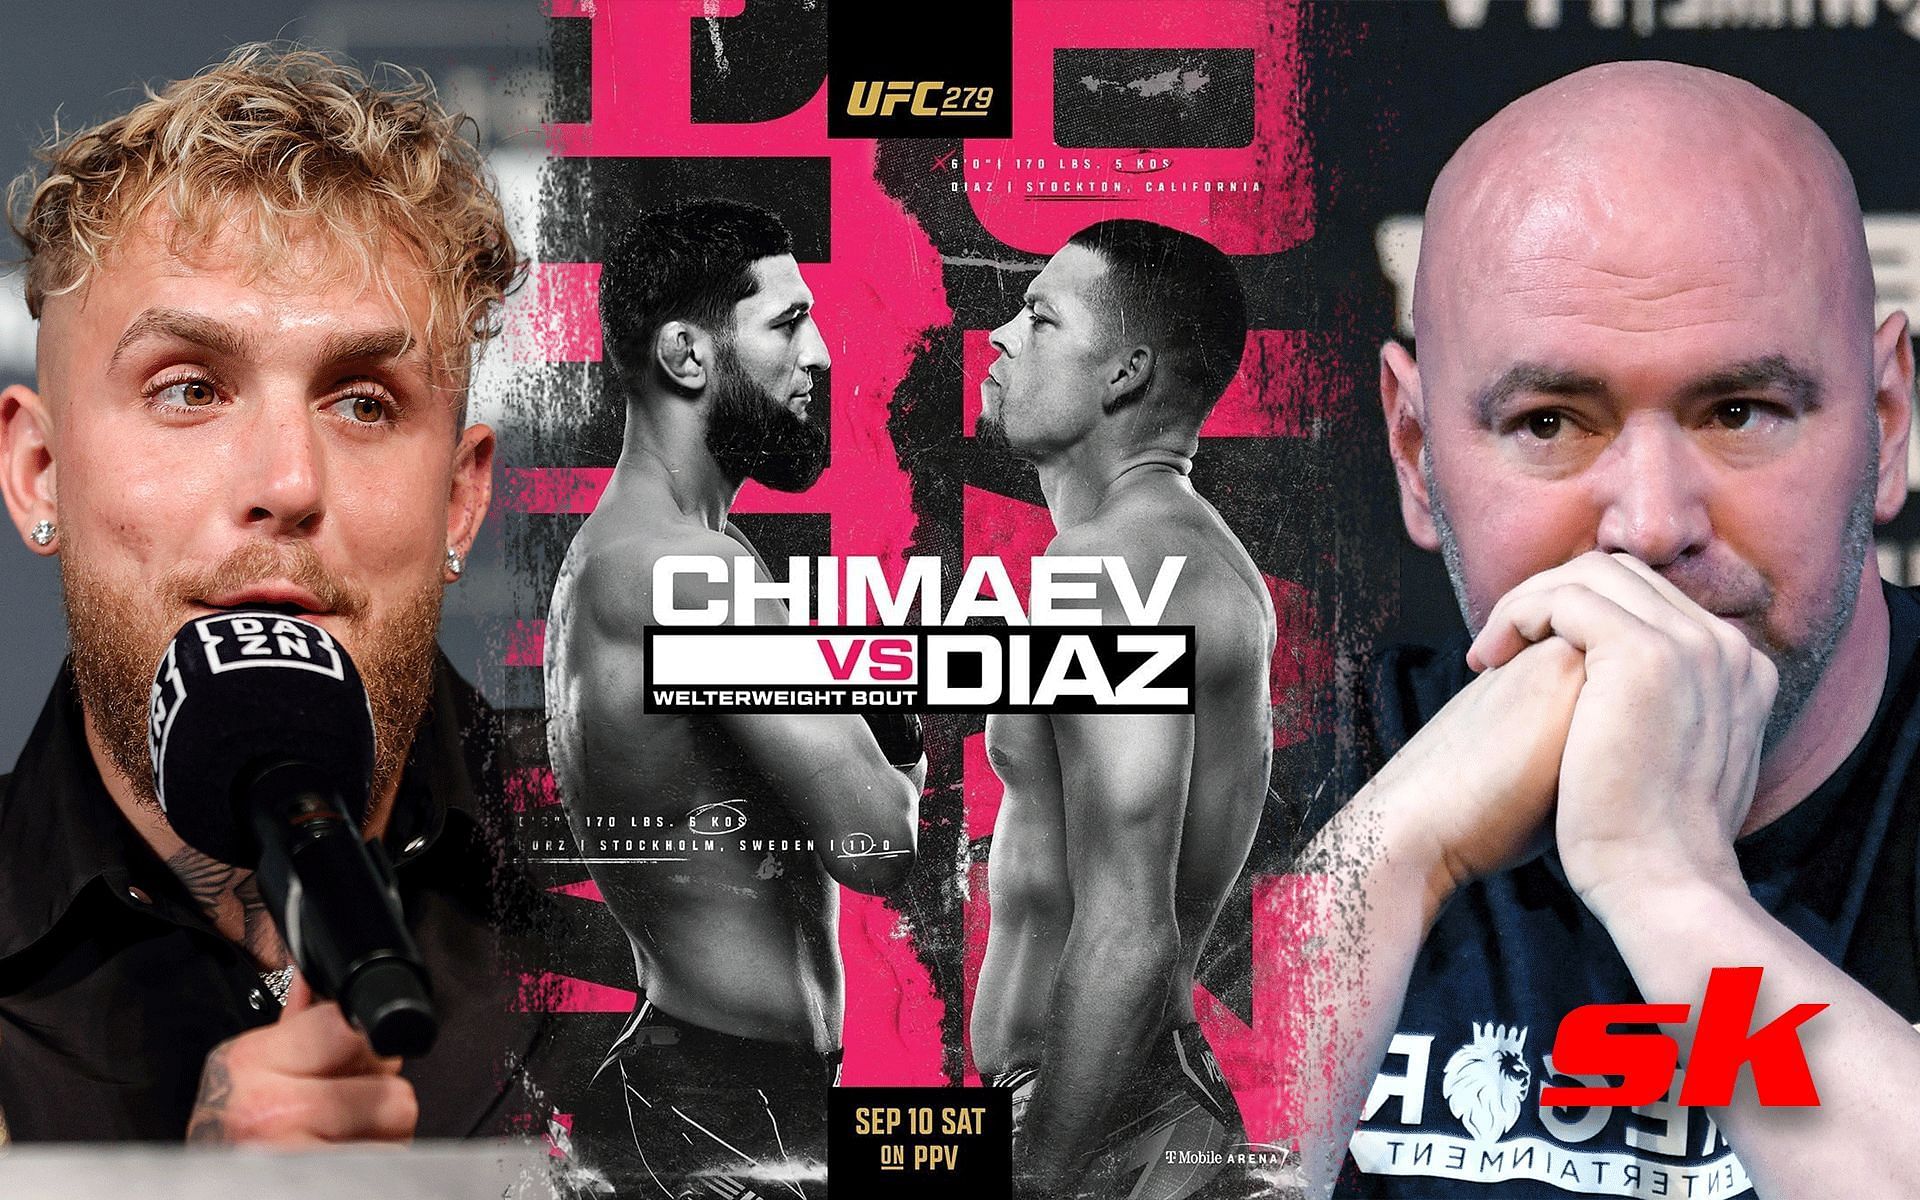 (L to R) Jake Paul, Khamzat Chimaev vs. Nate Diaz poster (via @ufc on Instagram), Dana White